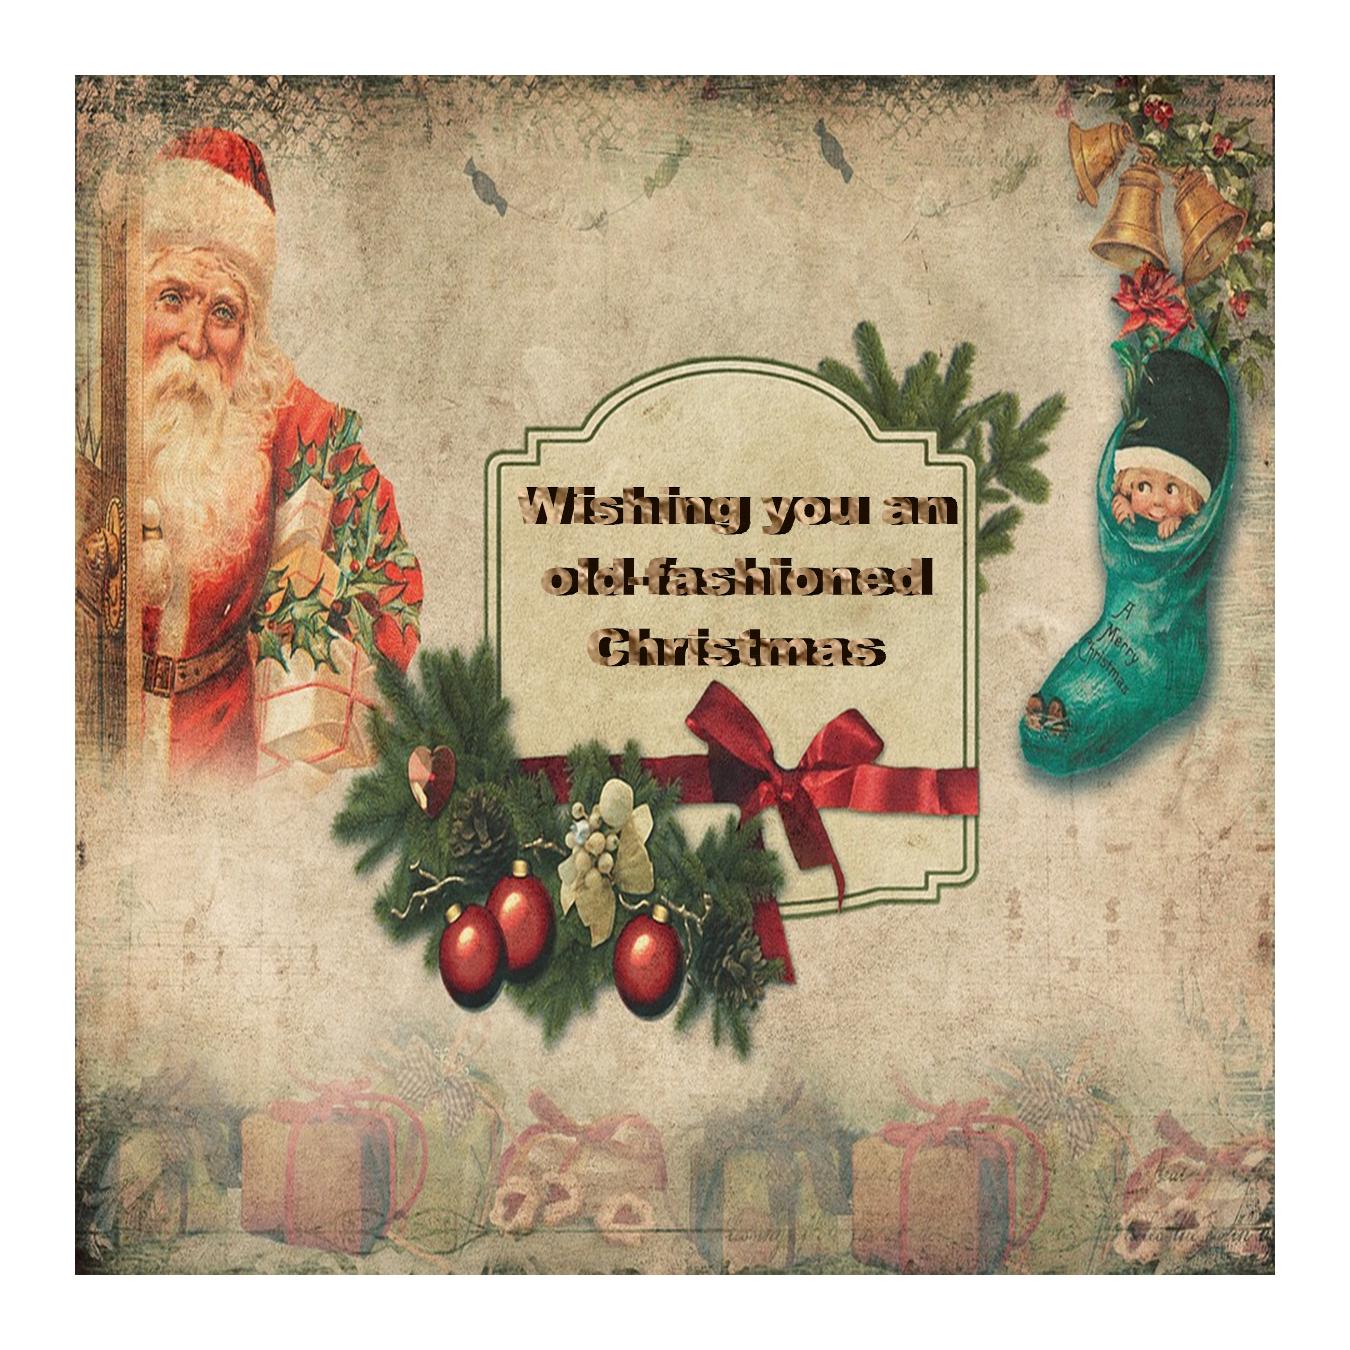 https://pixabay.com/en/christmas-santa-claus-3845837/ and Microsoft Publisher